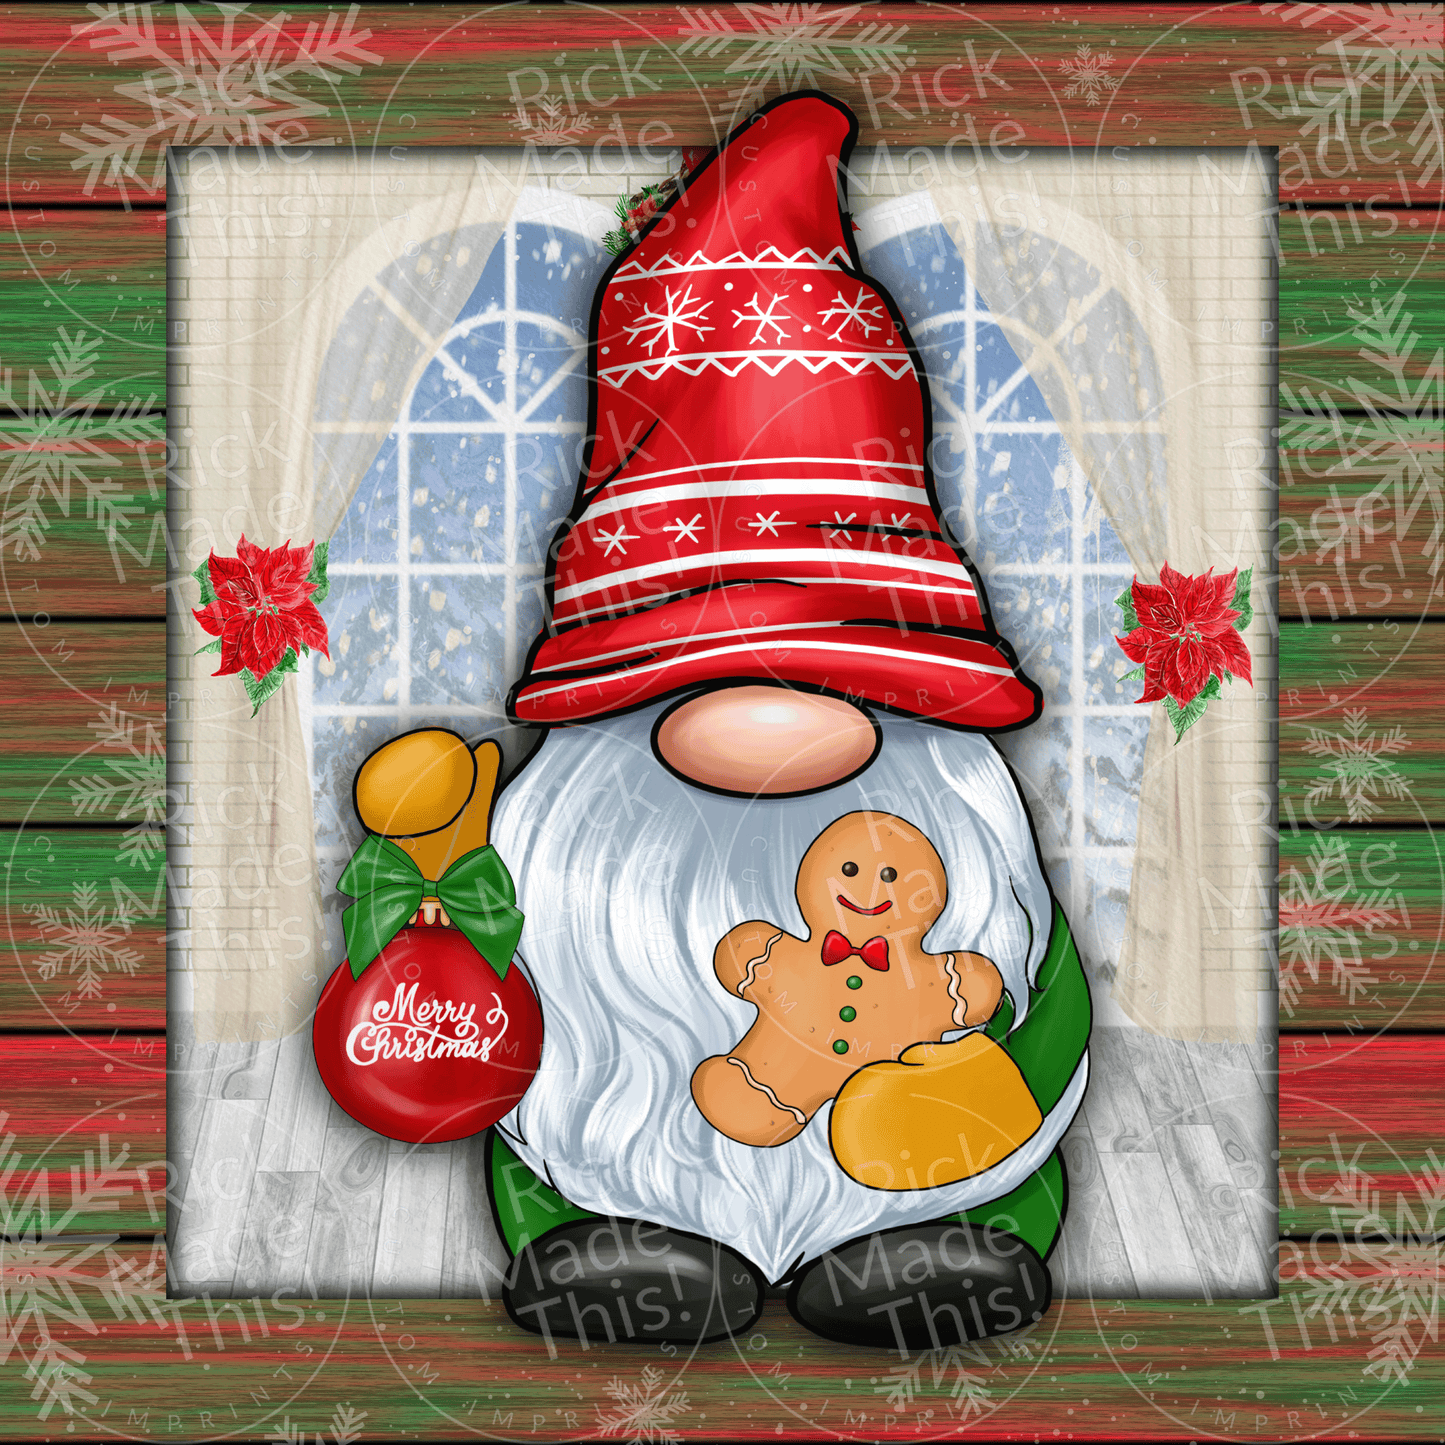 Christmas Gnome Trivets #4 (4 designs)